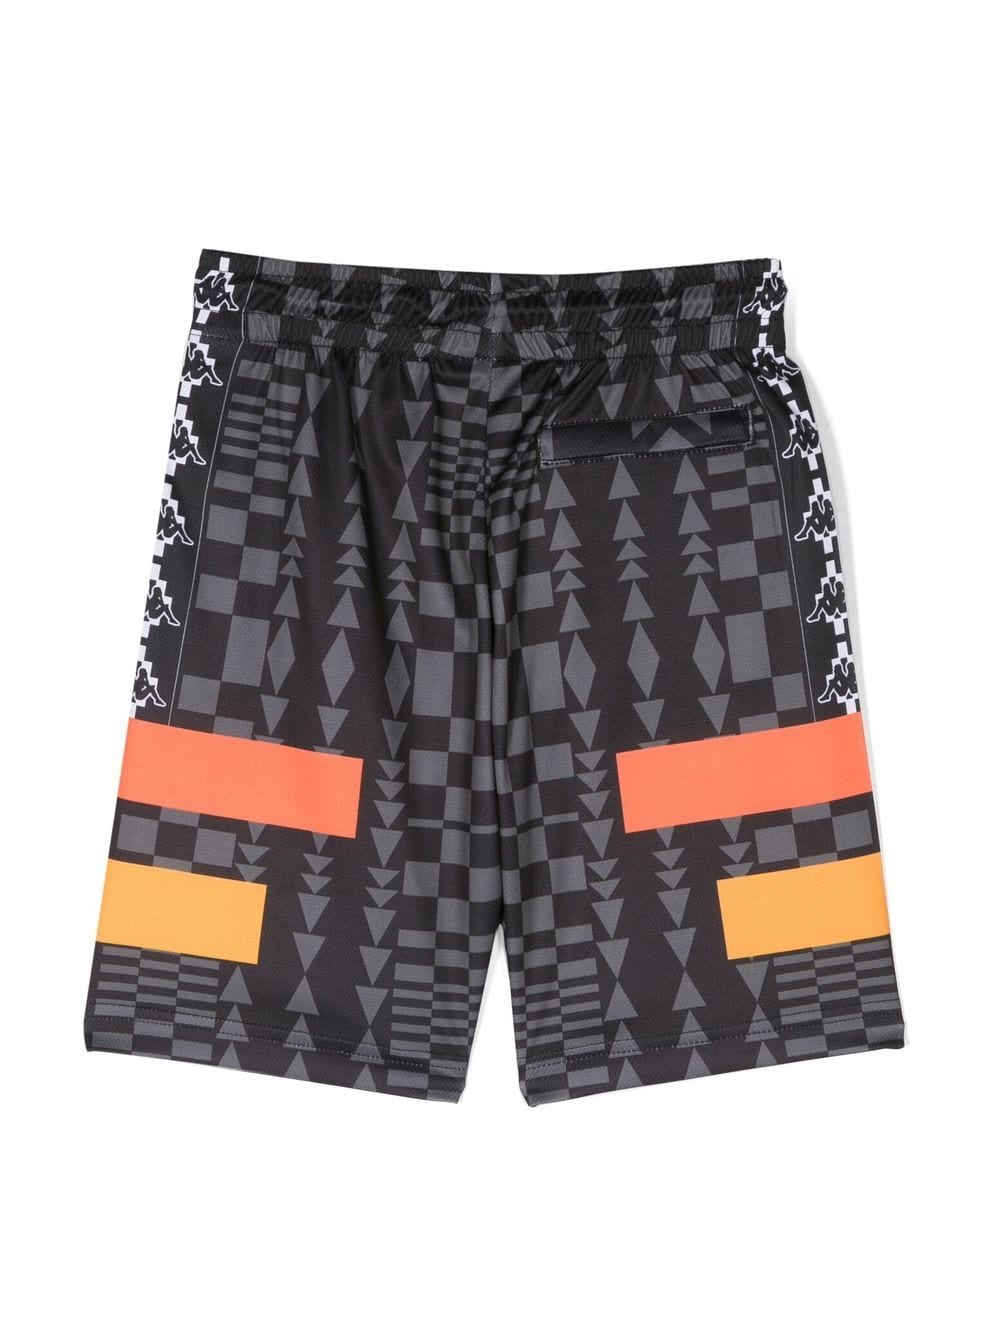 Marcelo Burlon x Kappa sport shorts with print